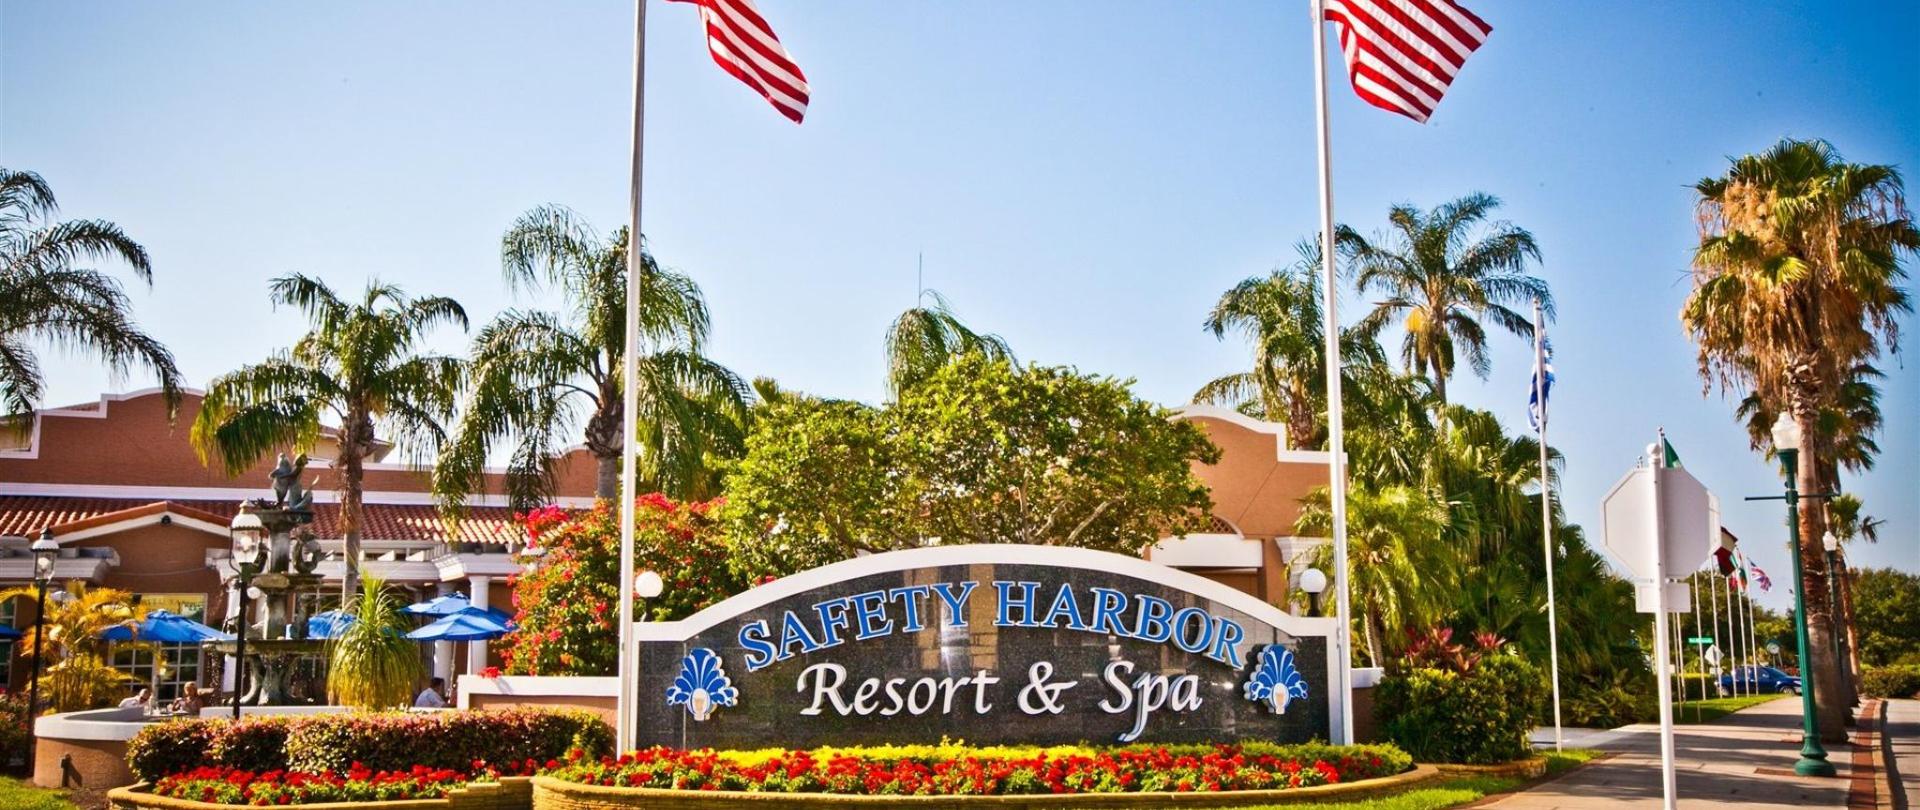 Safety Harbor Resort